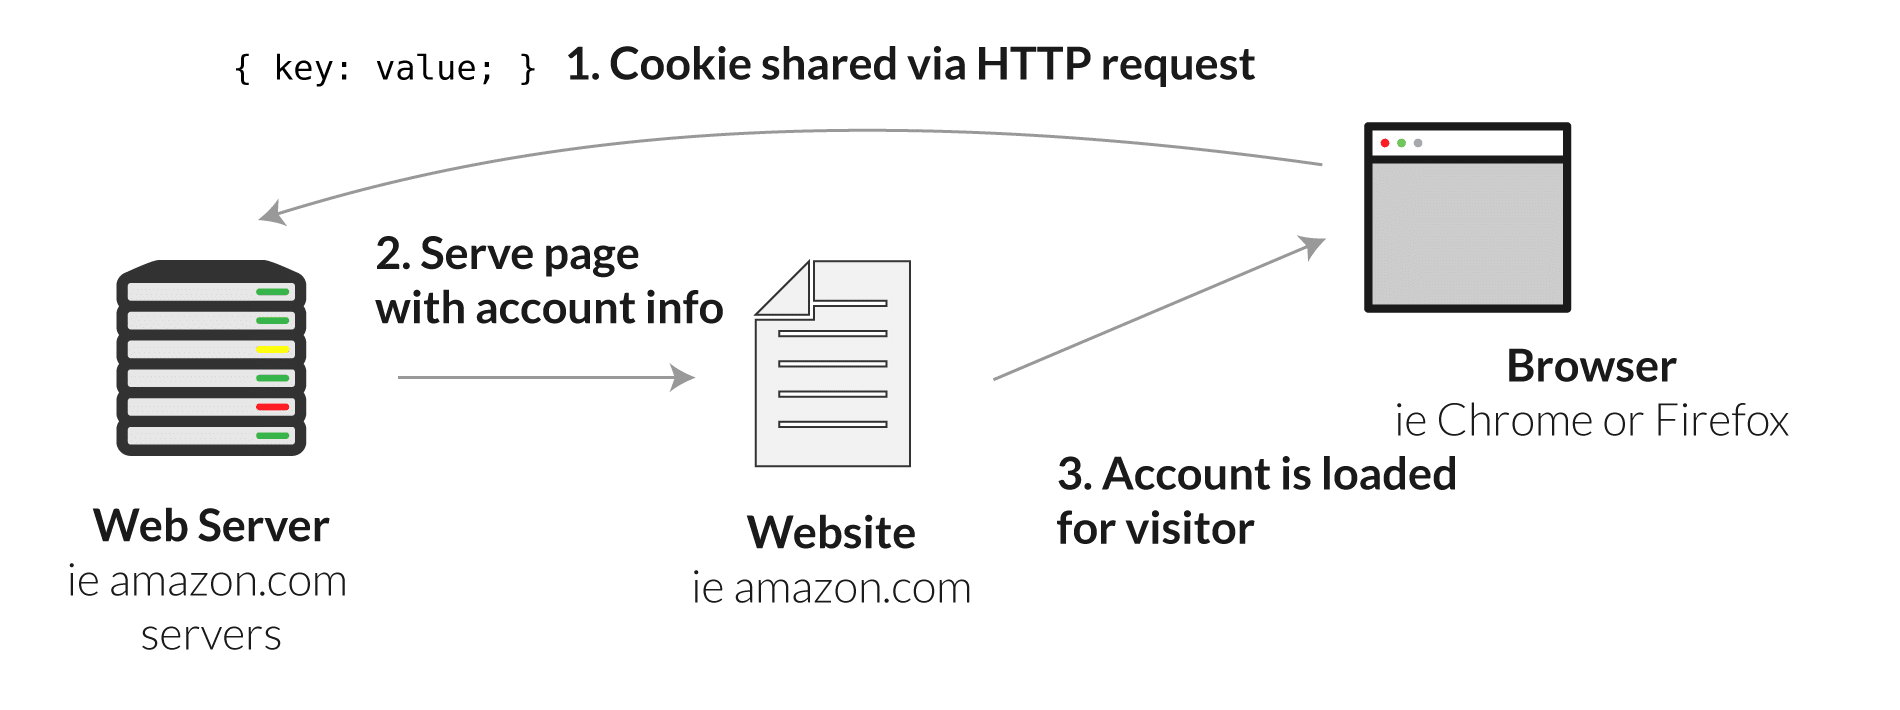 انتقال Cookie بین سرور و مرورگر وب کلاینت